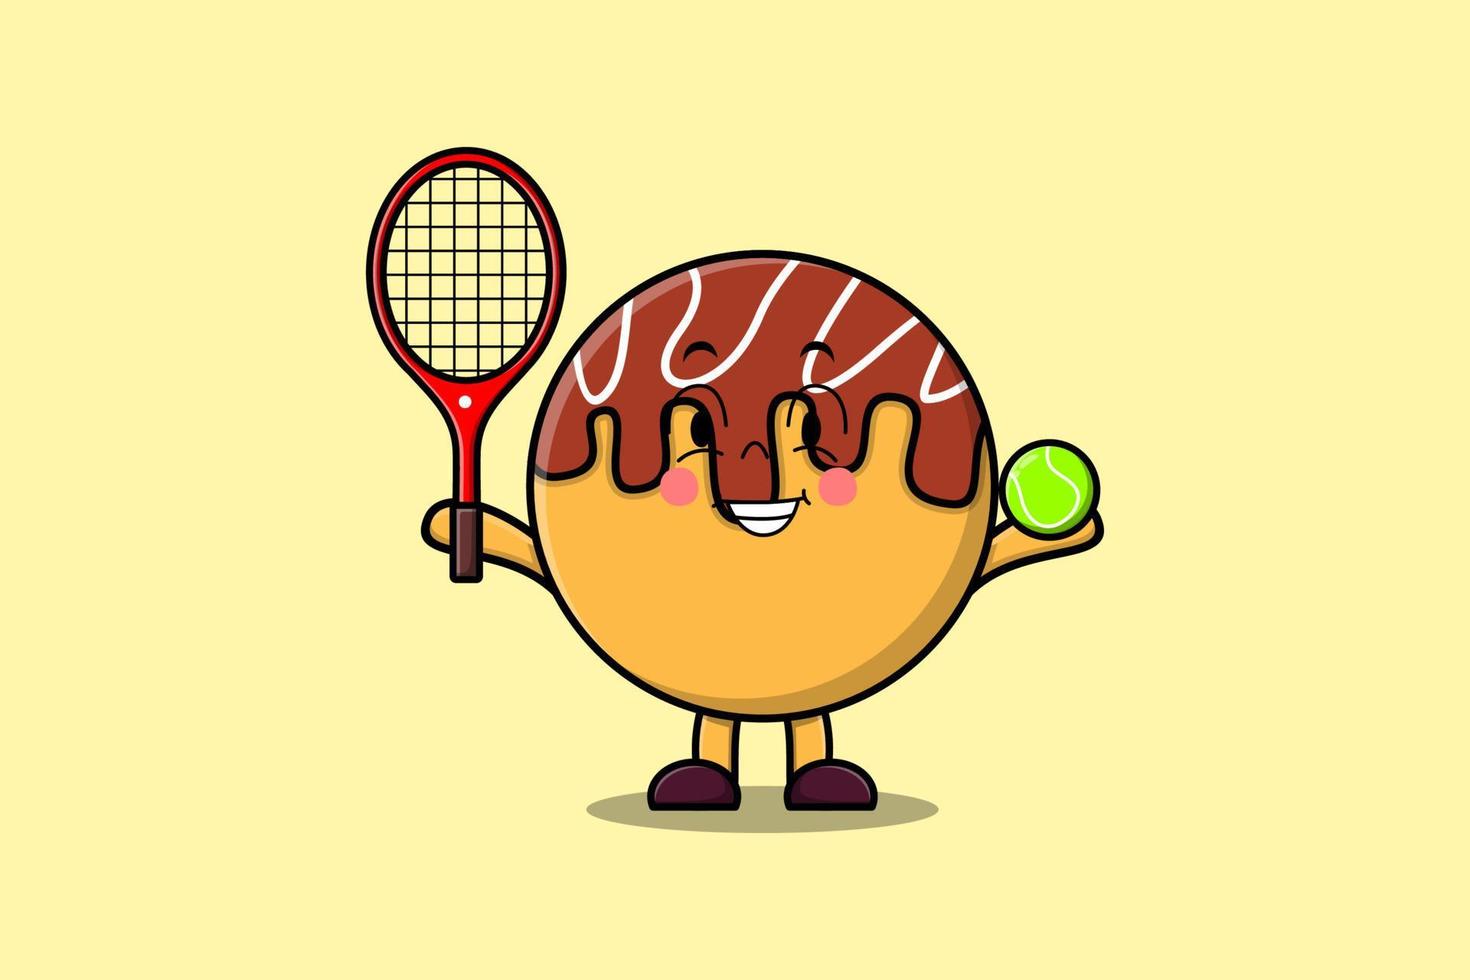 niedlicher karikatur-takoyaki-charakter spielt tennisplatz vektor